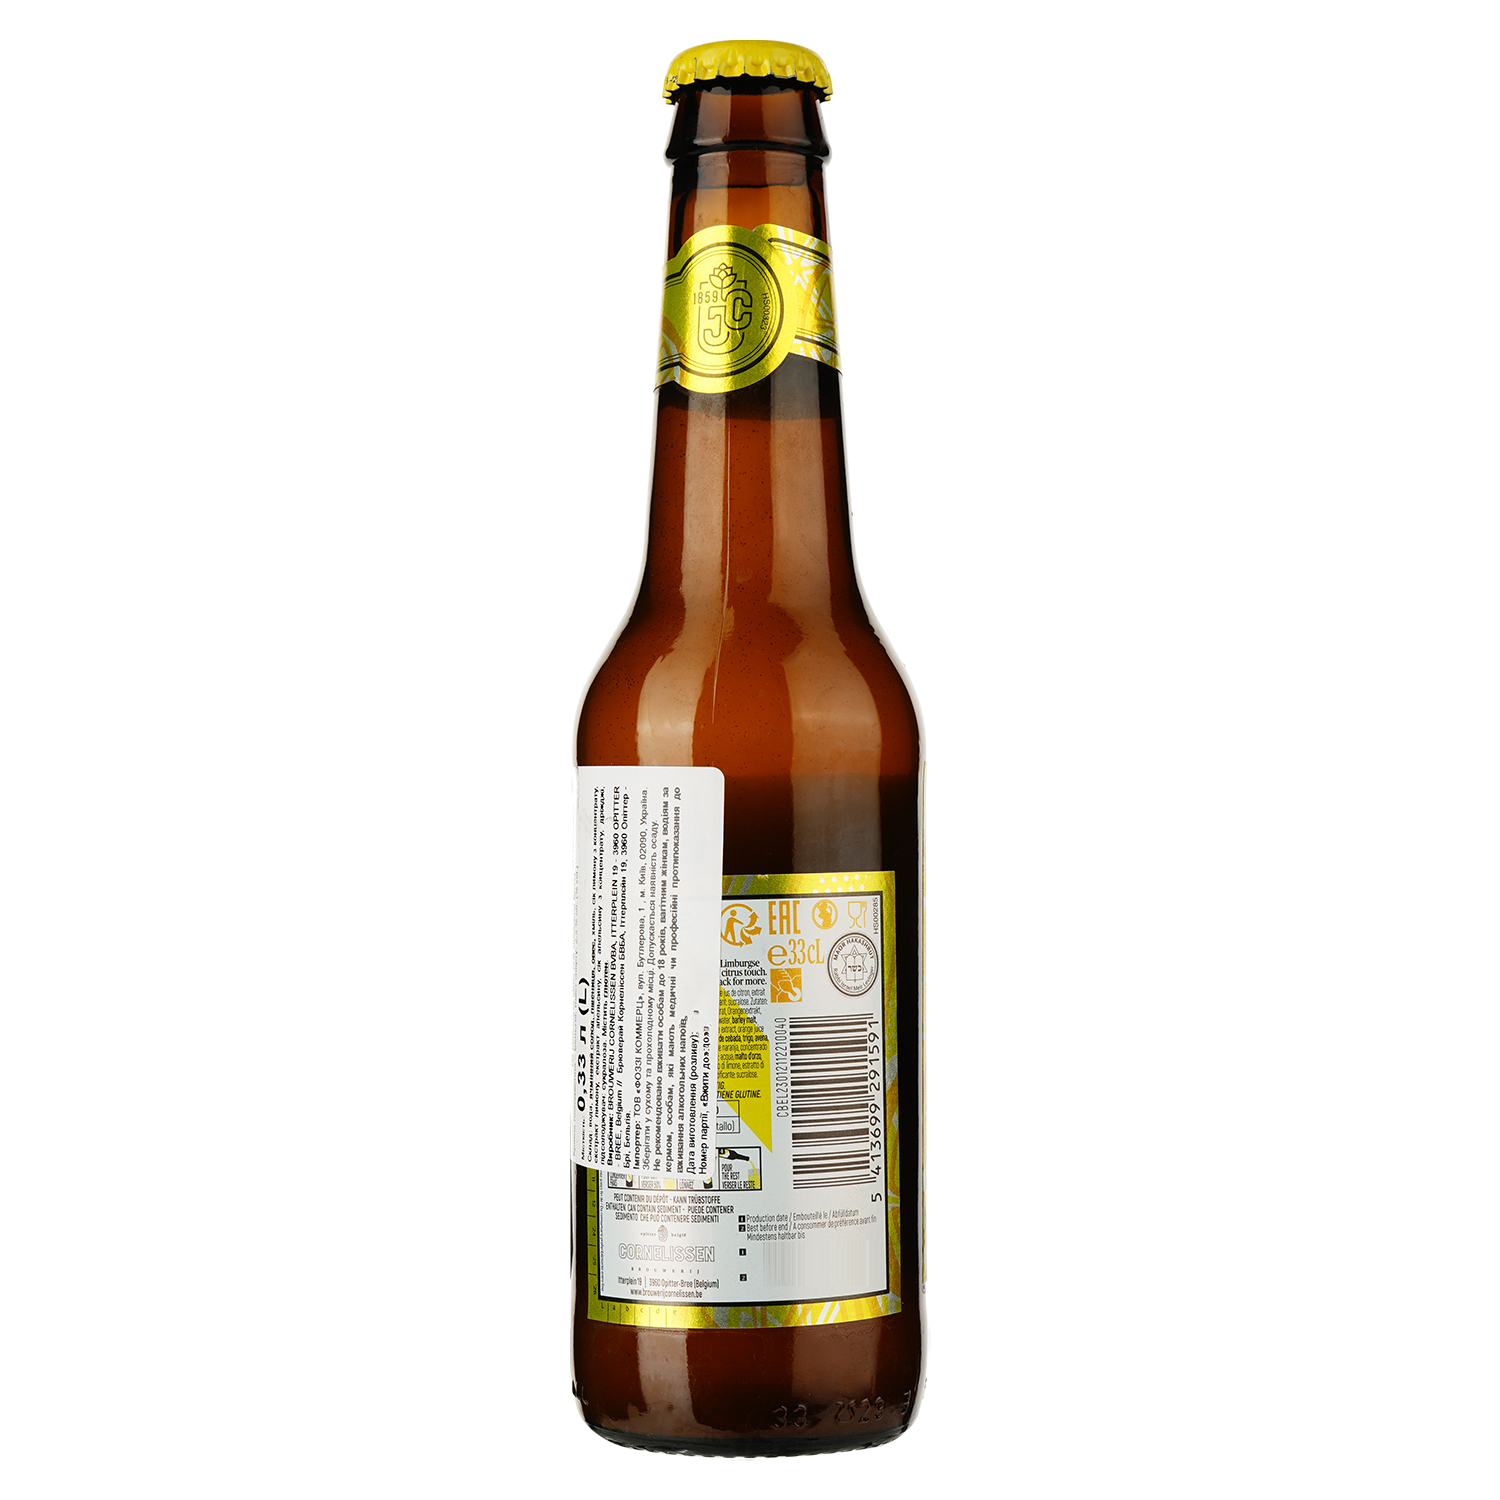 Пиво Limburgse Witte Lemon белое 2.3% 0.33 л - фото 2